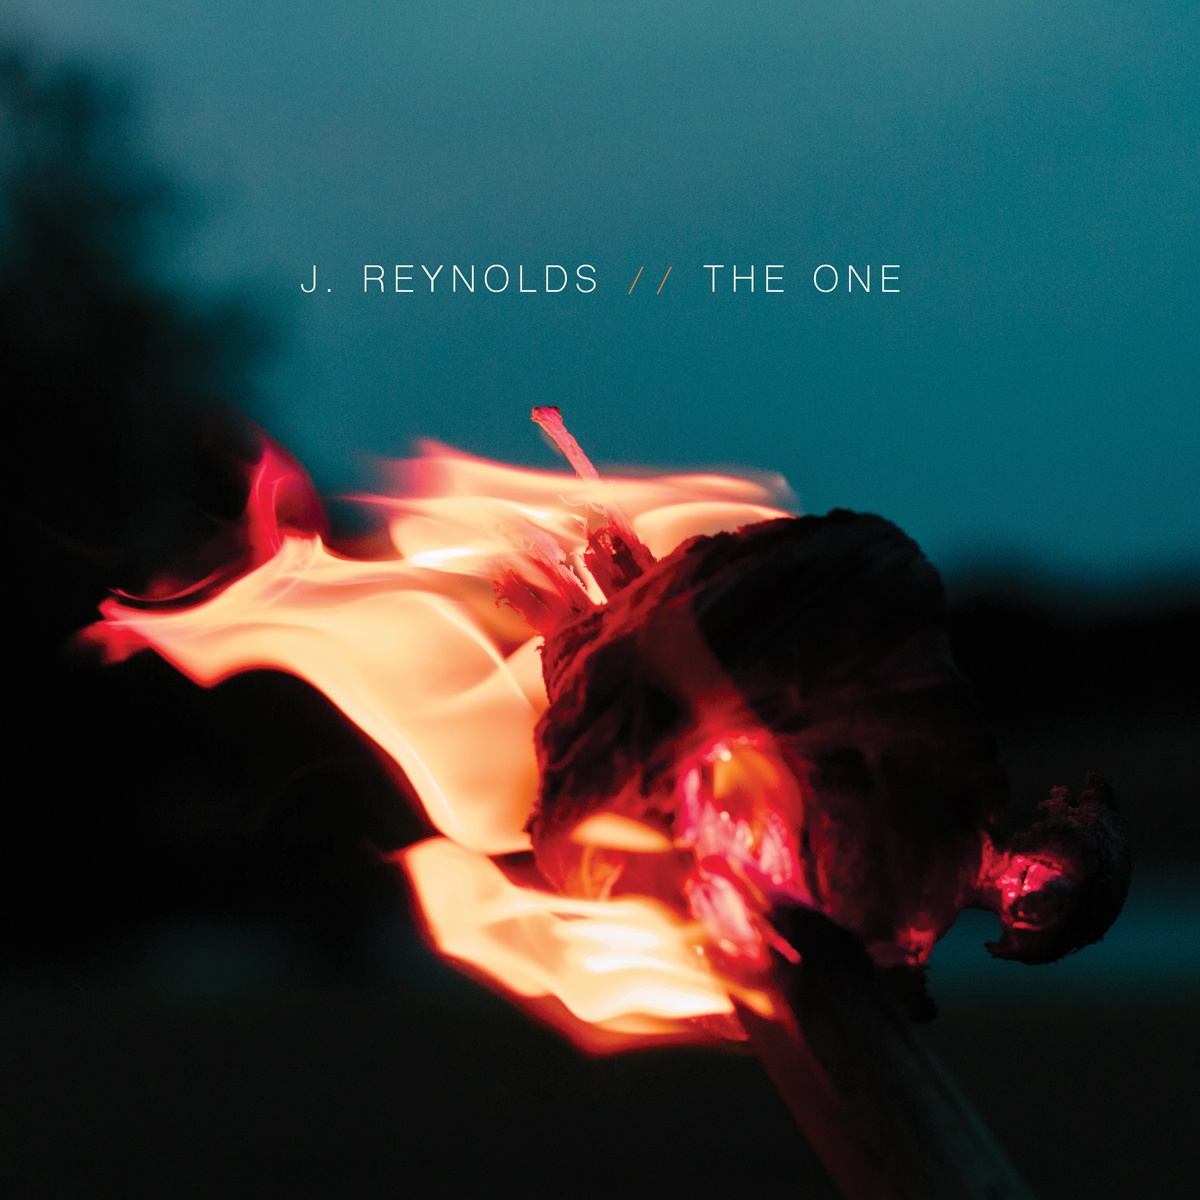 J. Reynolds / The One